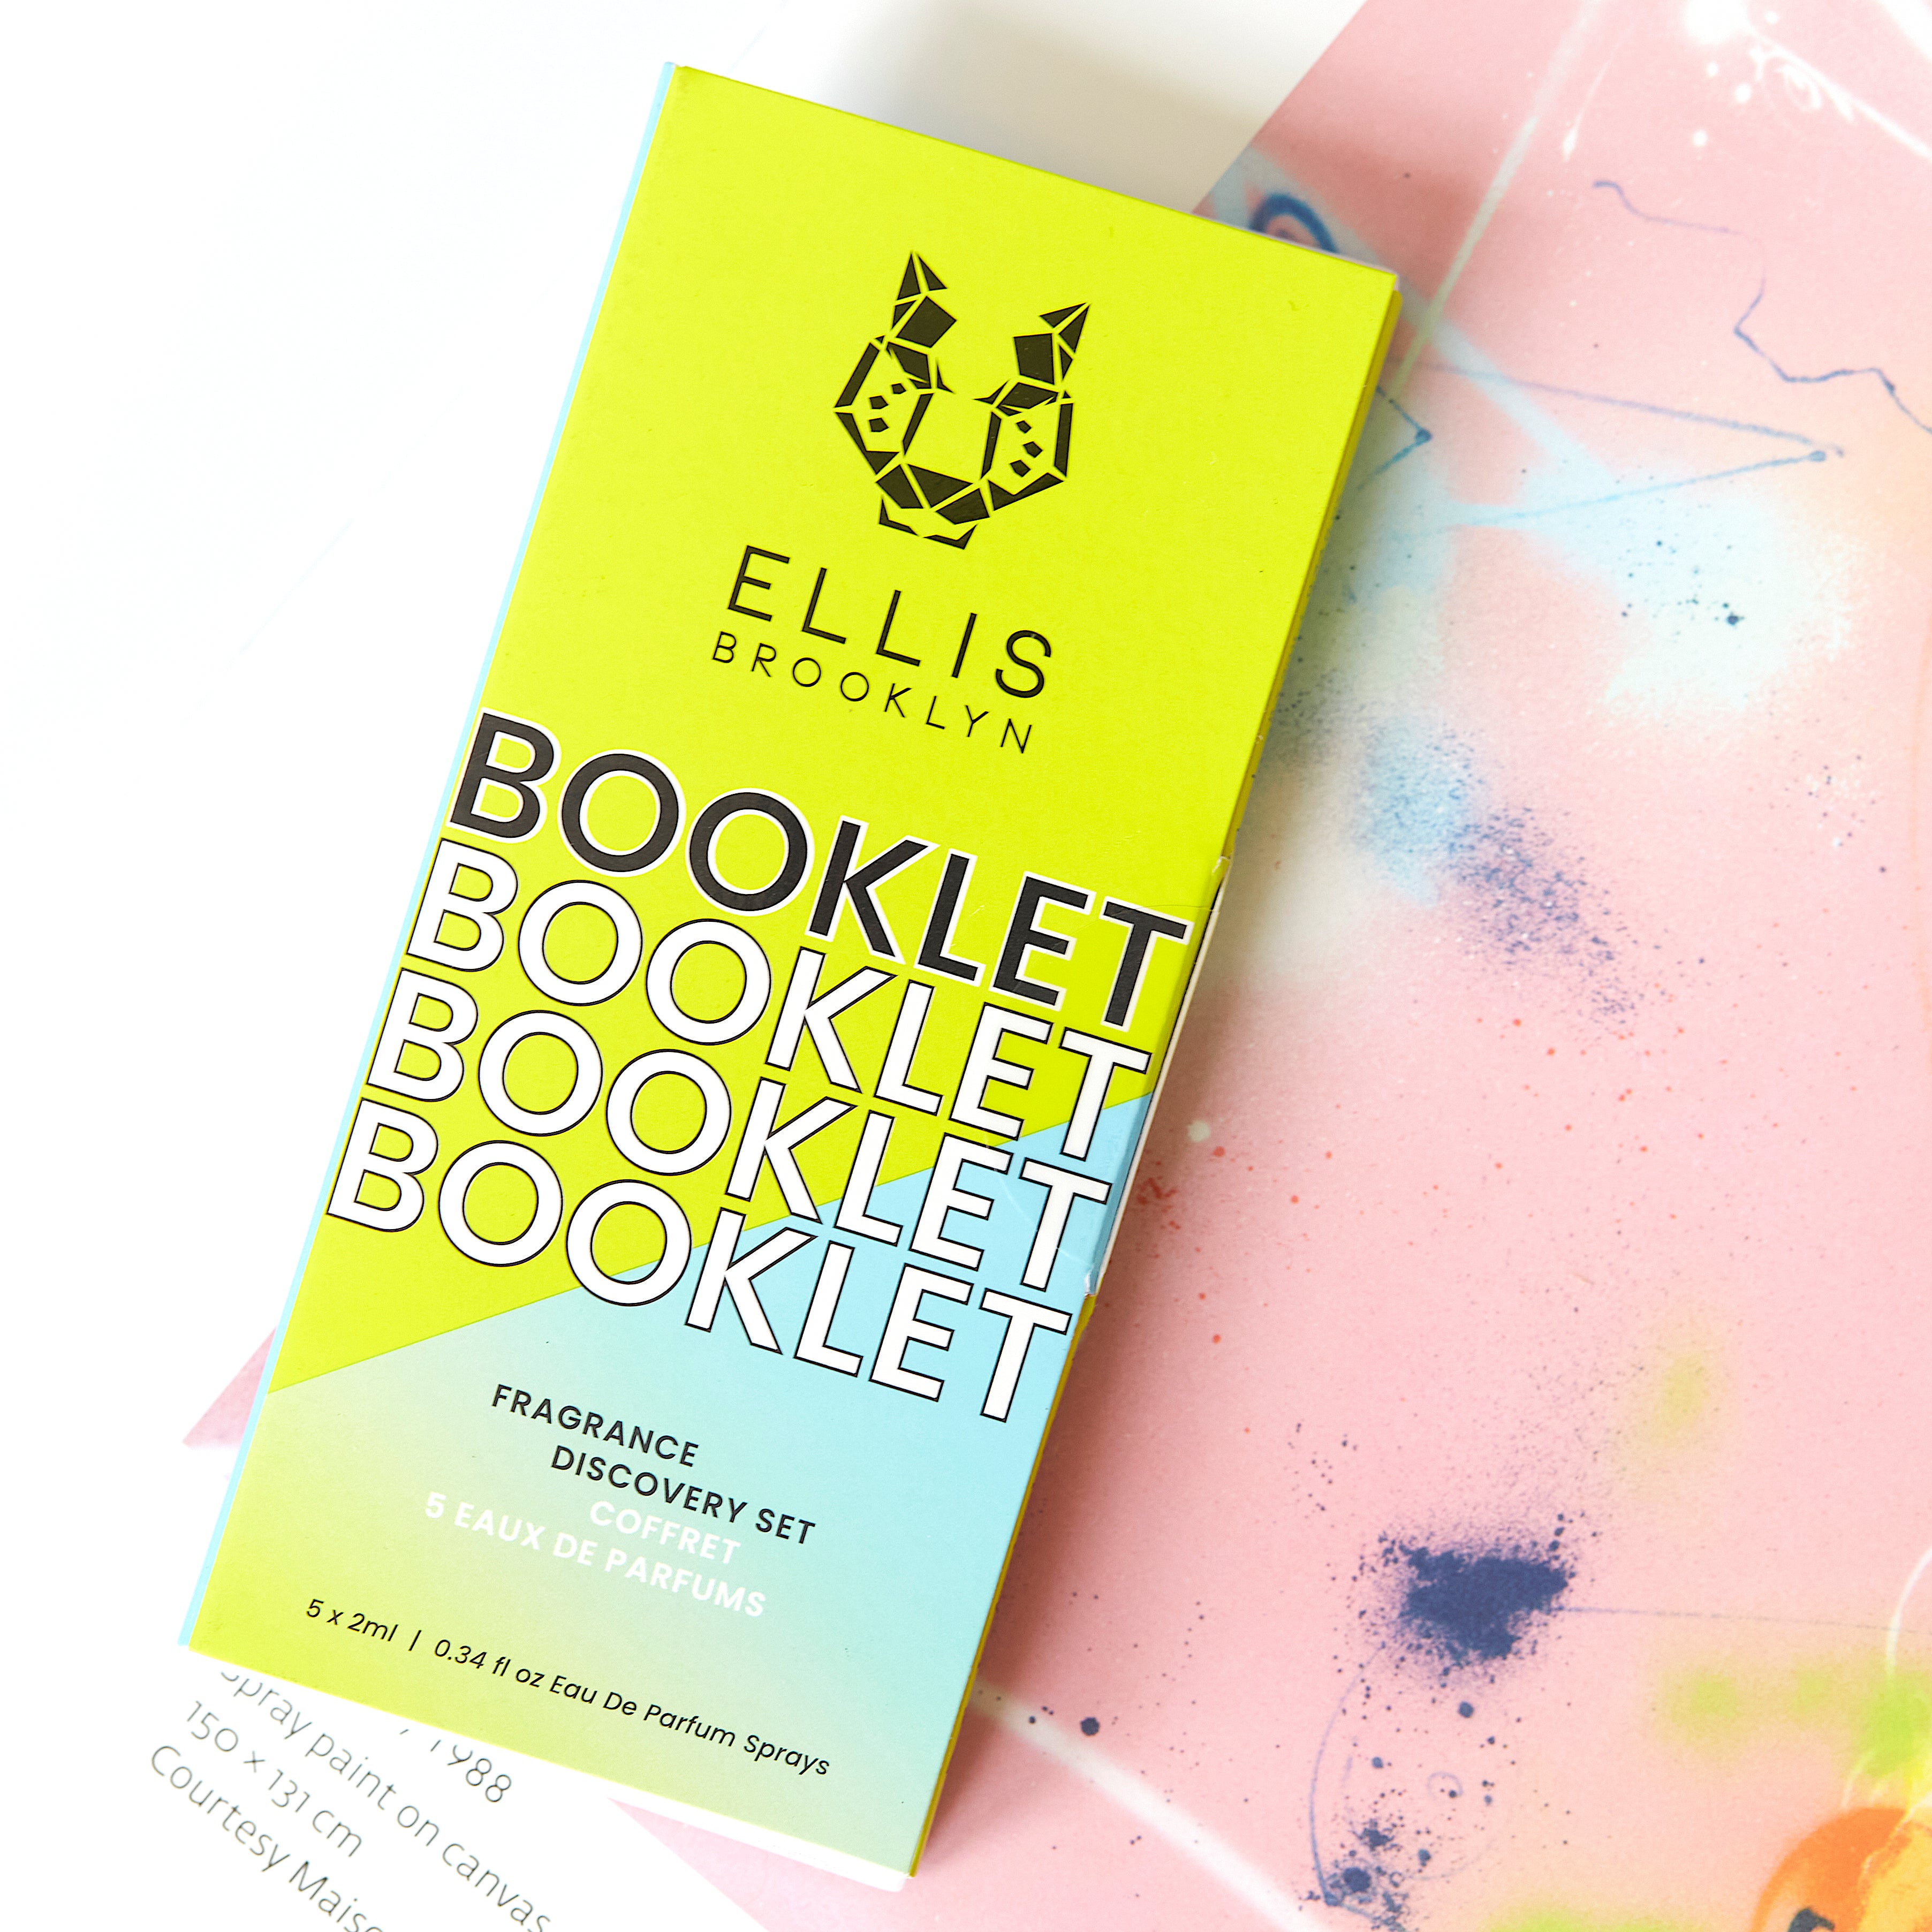 Ellis Brooklyn Mini Chapters Perfume Coffret Set